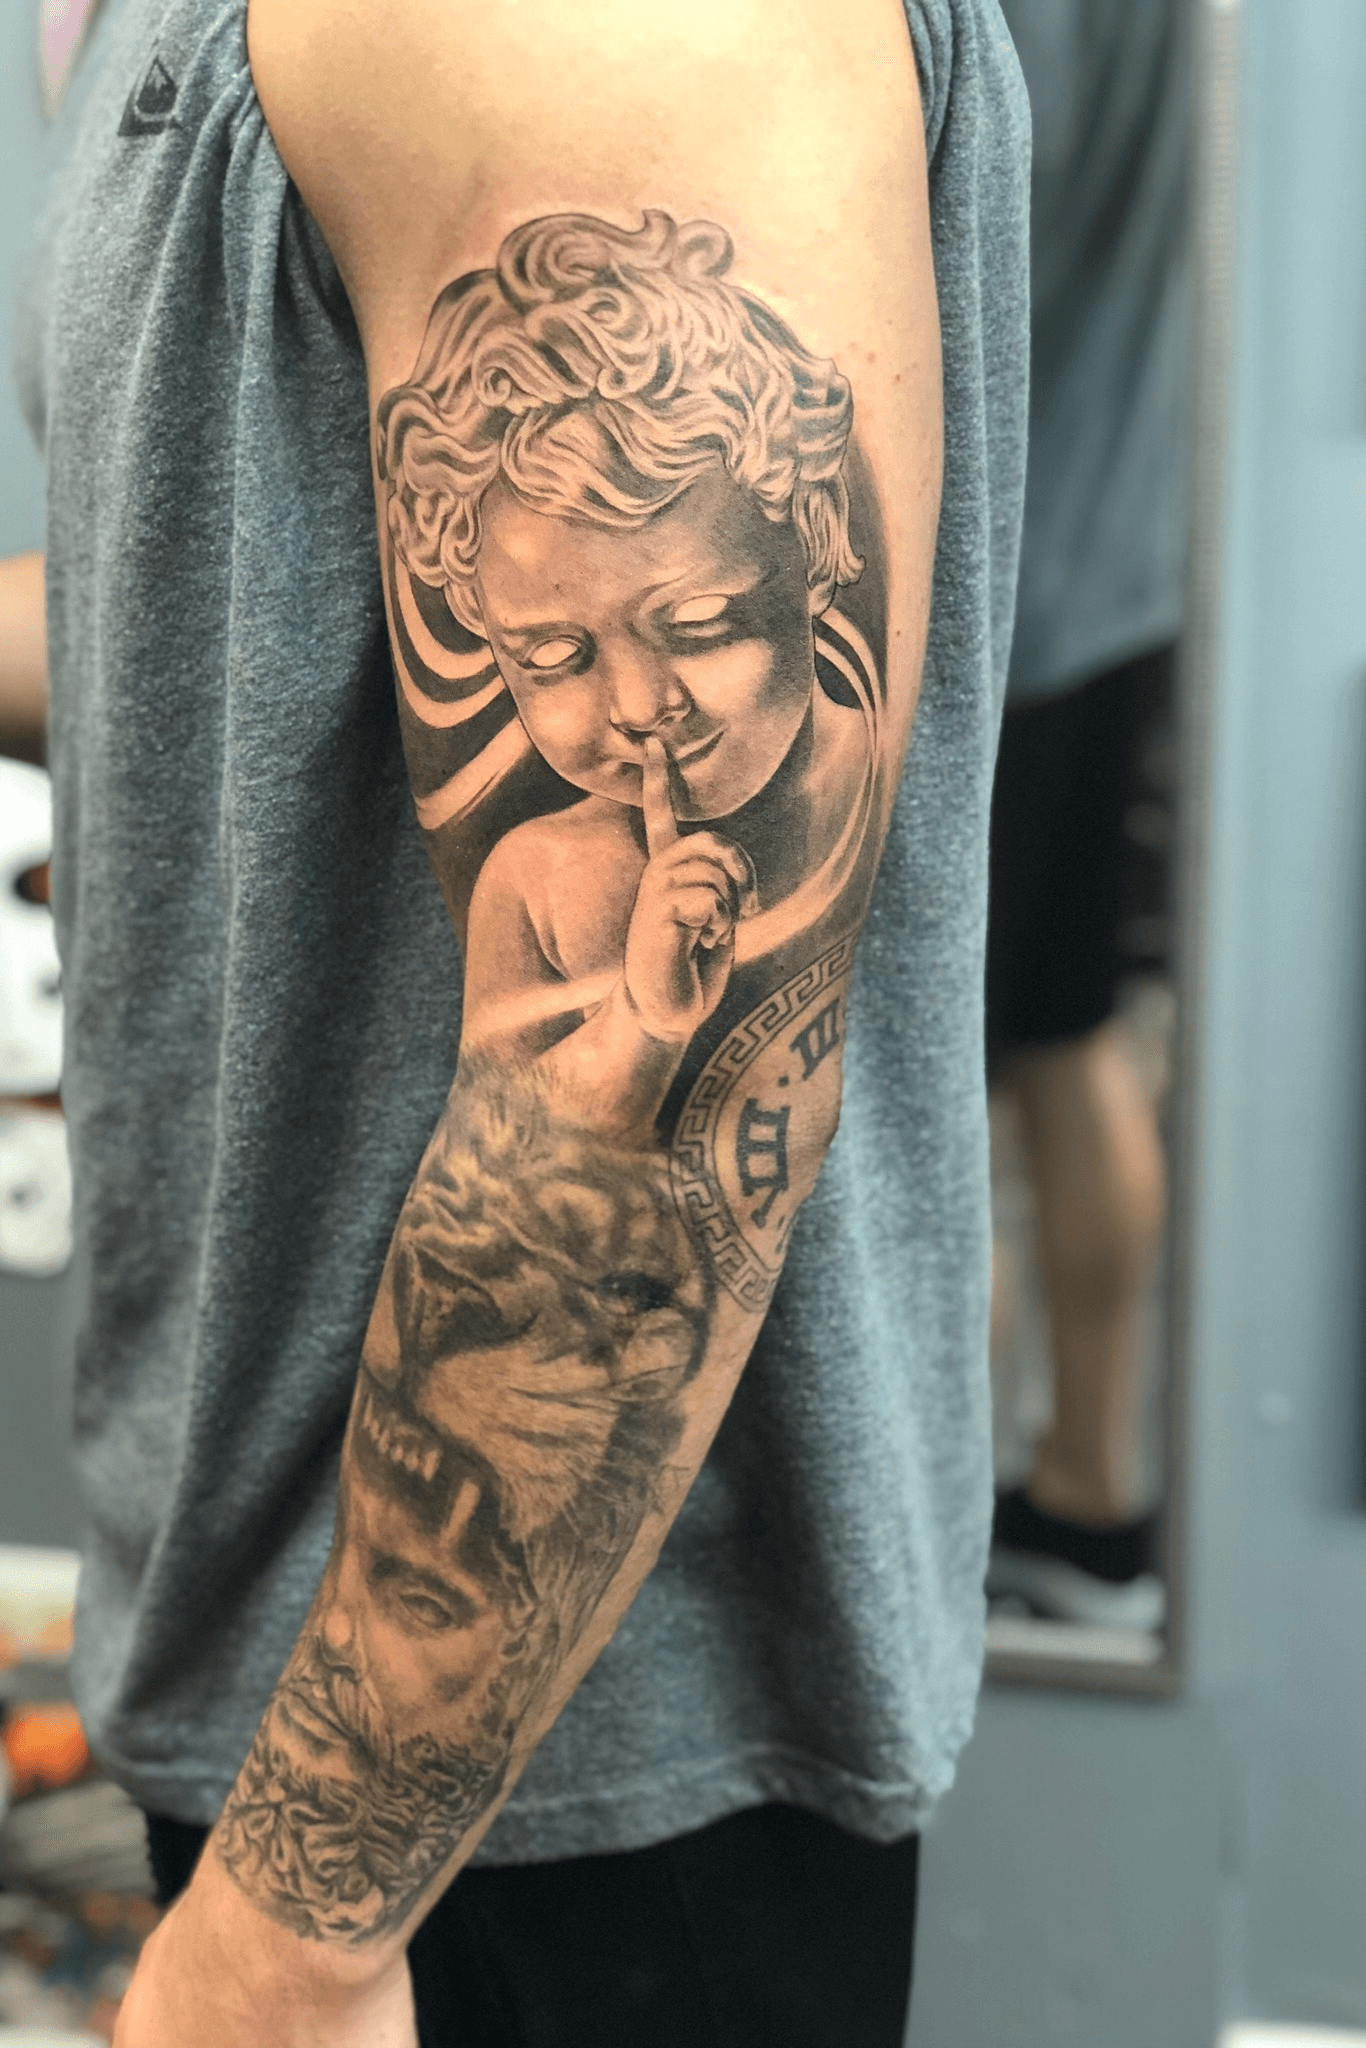 The Top 29 Cherub Tattoo Ideas  2021 Inspiration Guide  Cherub tattoo  Tattoos Cherub